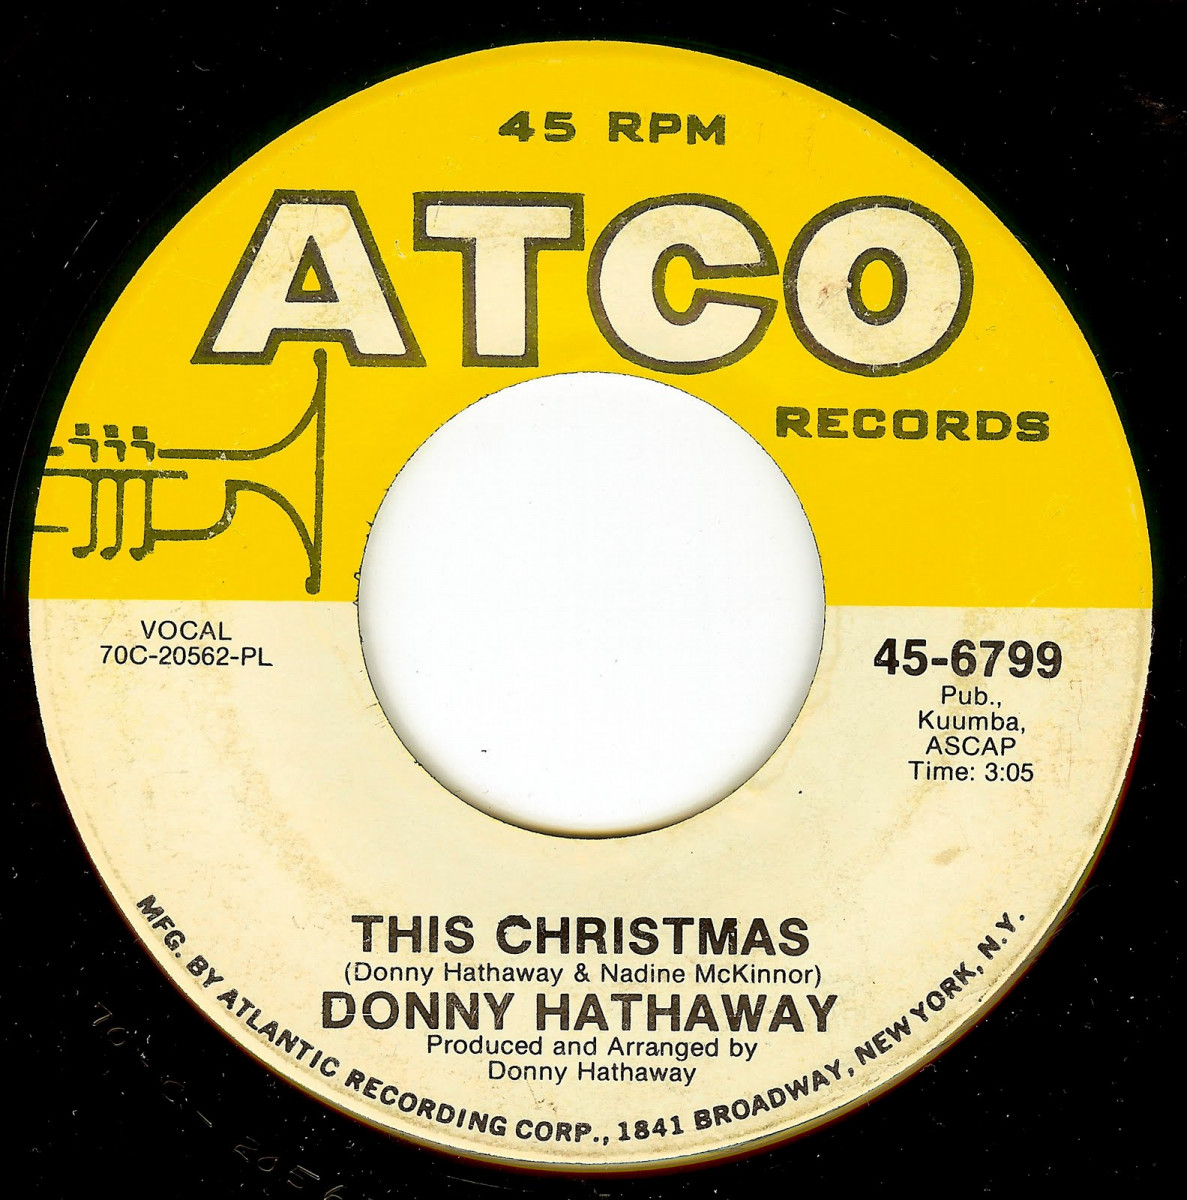 Sabrina Carpenter - It's finally Christmas